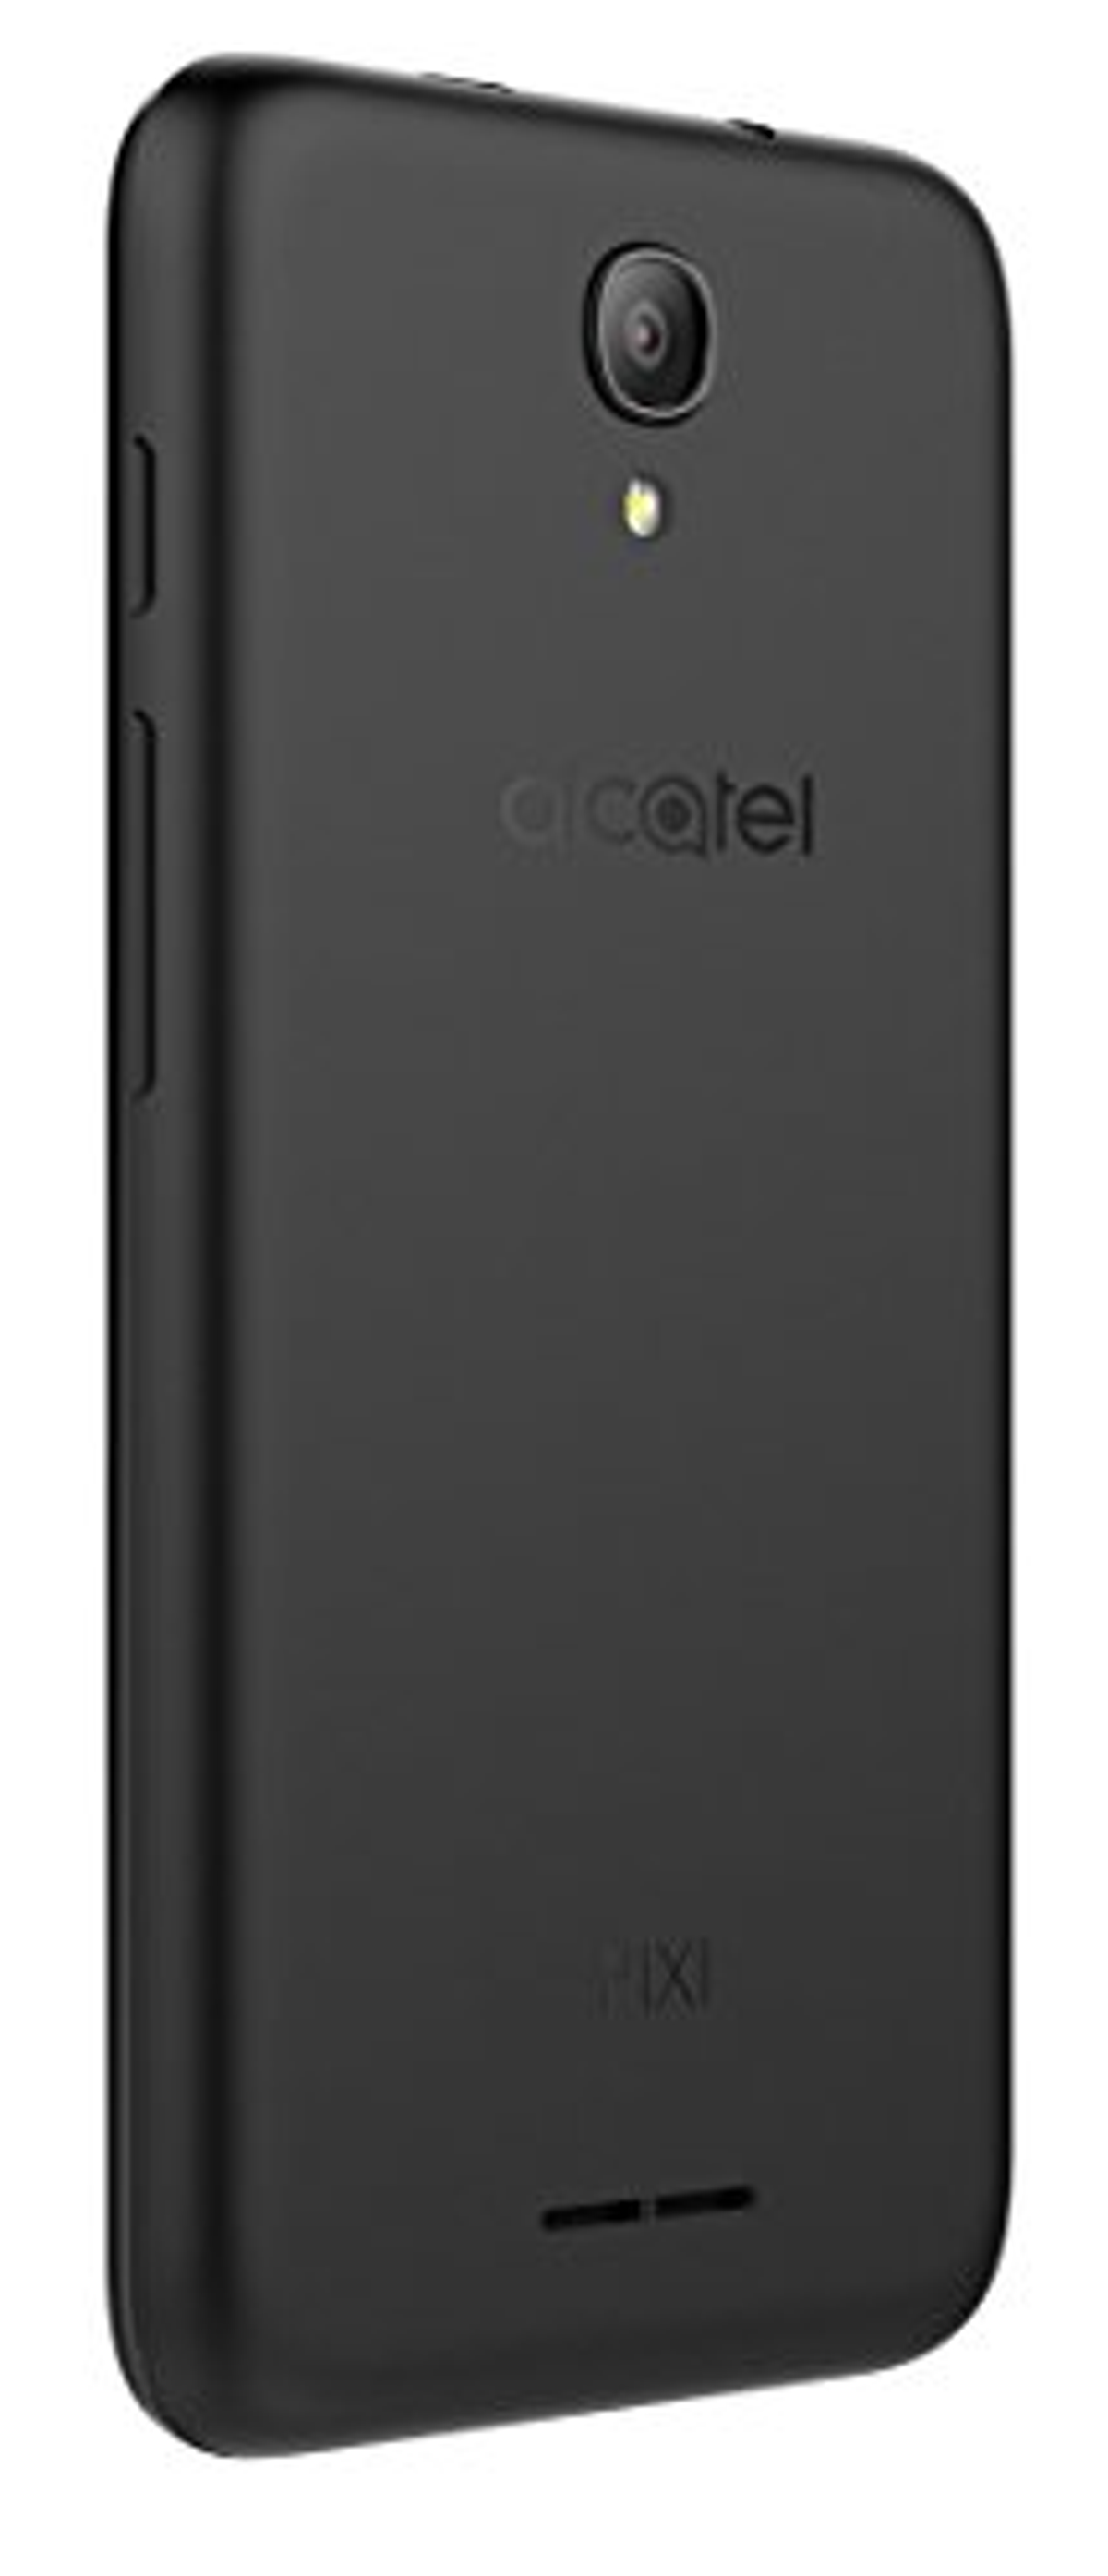 4-5 SIM PIXI ALCATEL BLACK 8 GB 5010D Dual (3G) Schwarz